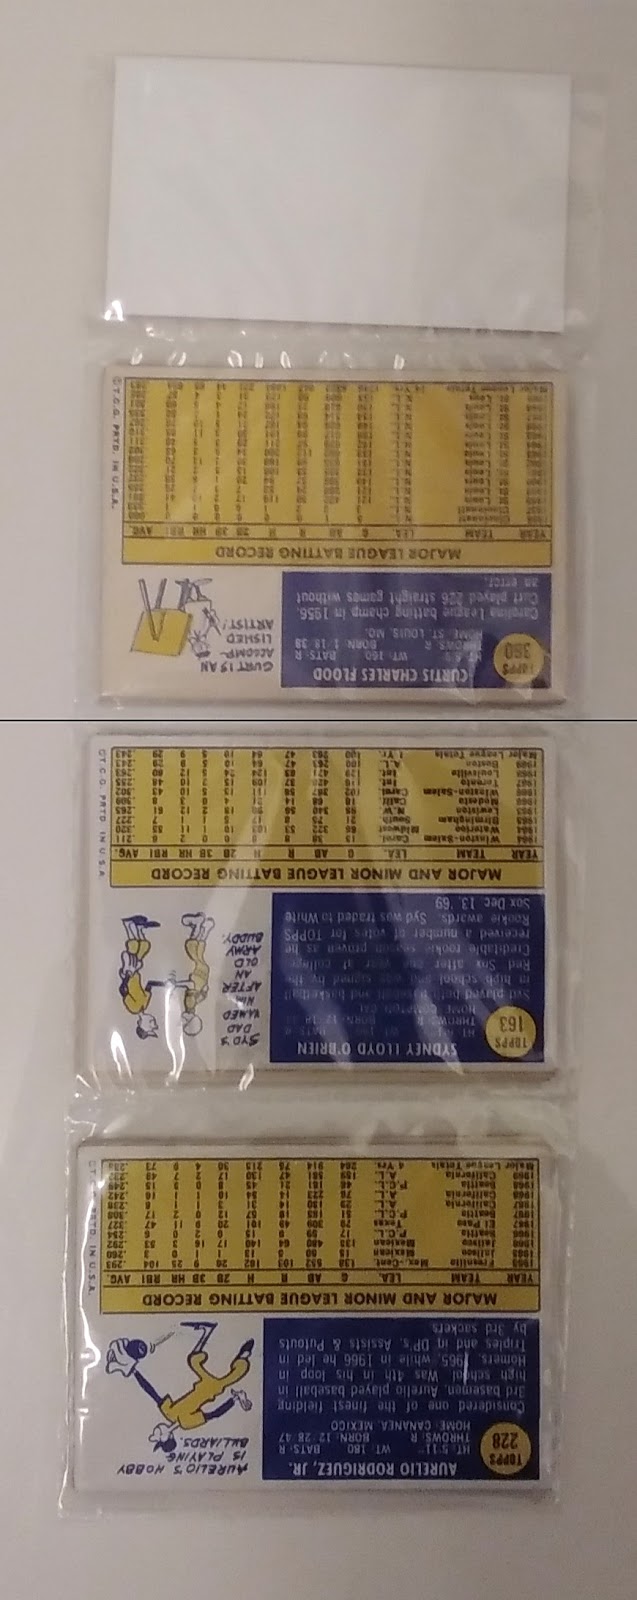 Baseball Cards Buy Sell | 116 Beacon Terrace, Springfield, MA 01119 | Phone: (413) 847-6090